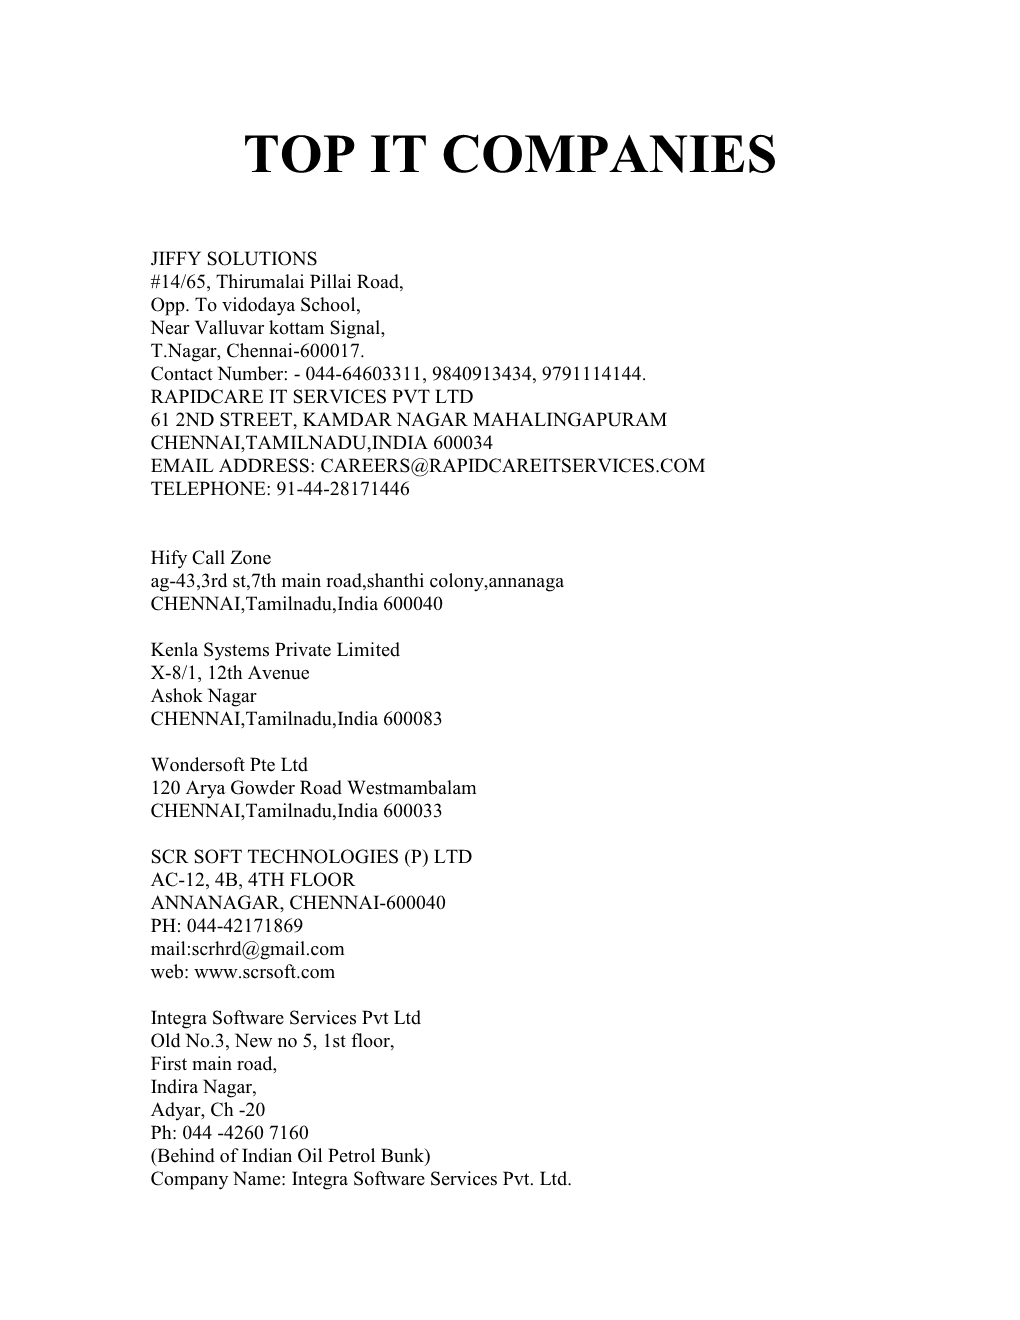 Top It Companies